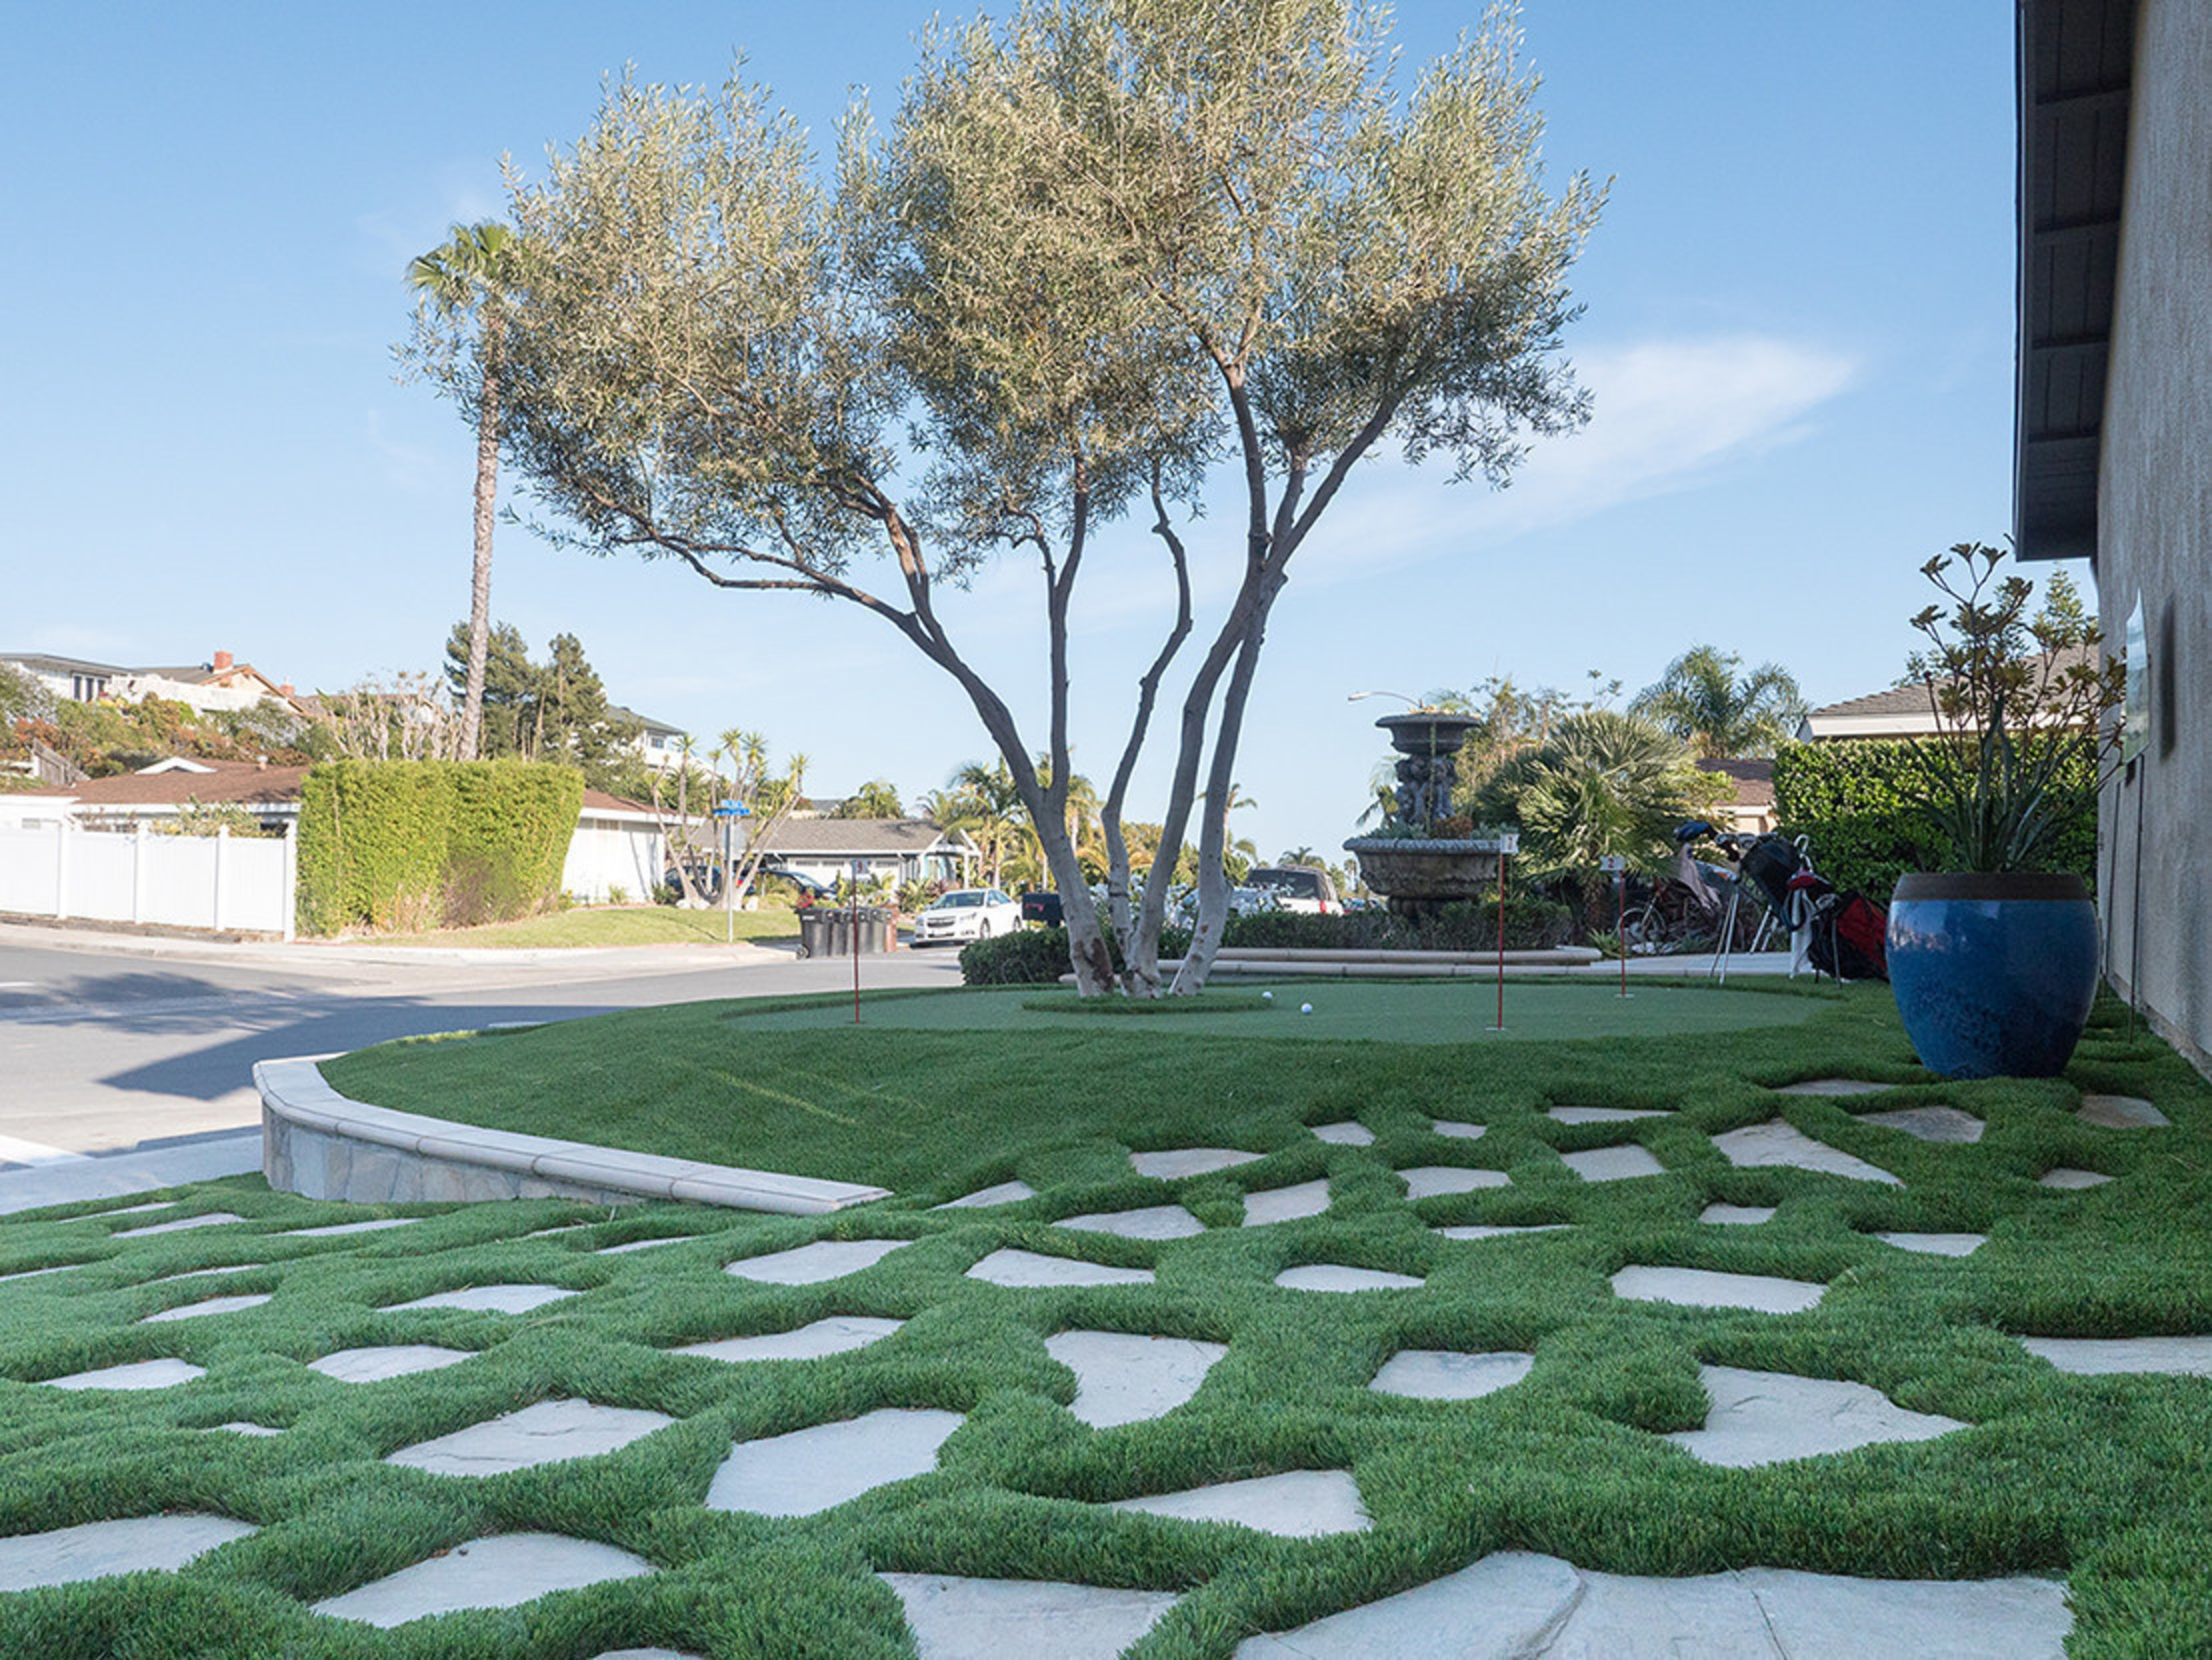 Anchor Turf artificial grass installation at a home in Dana Point, California.